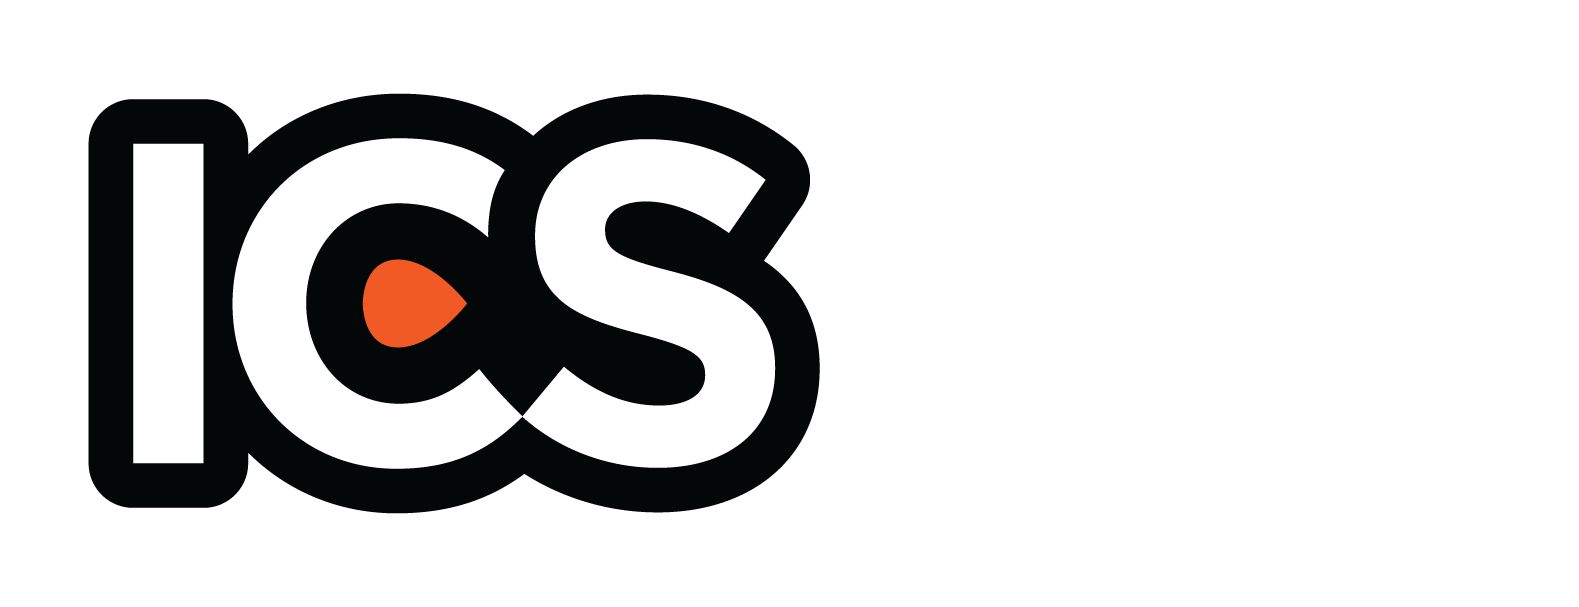 ICS Logo - ics-logo-whitetext-rgb-landscape.png – Balloon Ventures